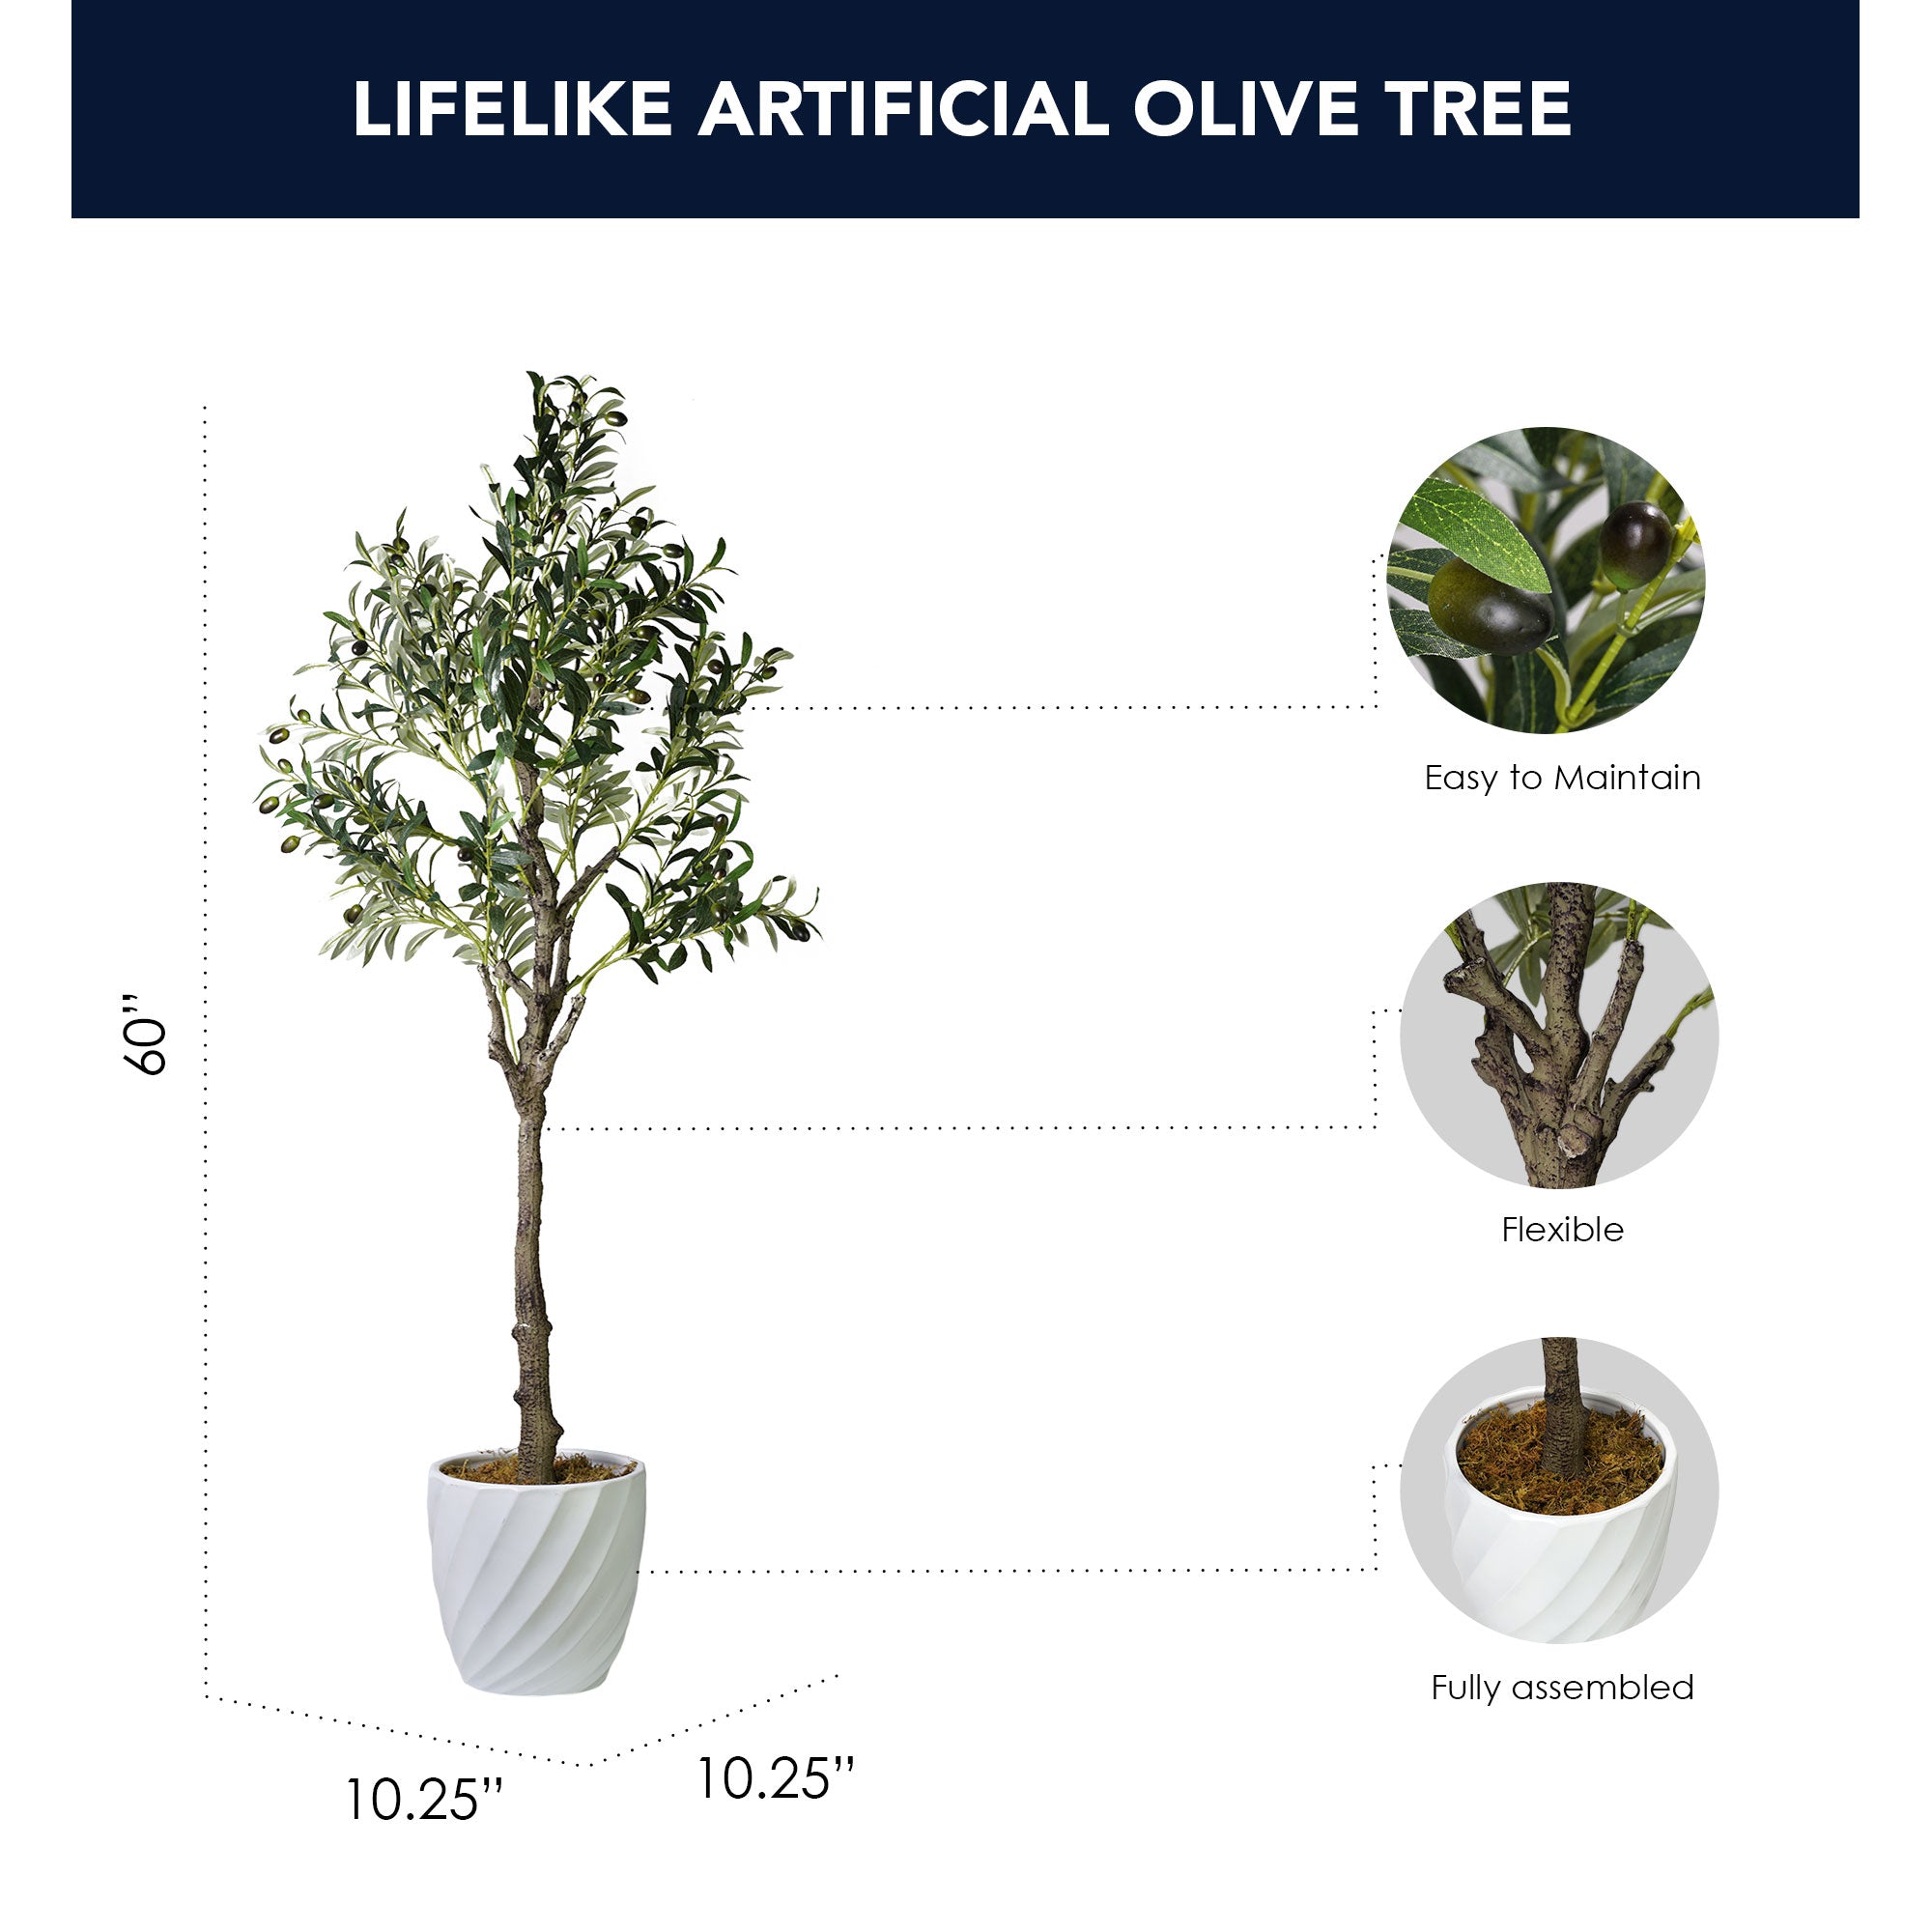 Artificial Olive Tree in White Ceramic Testured Pot - 60